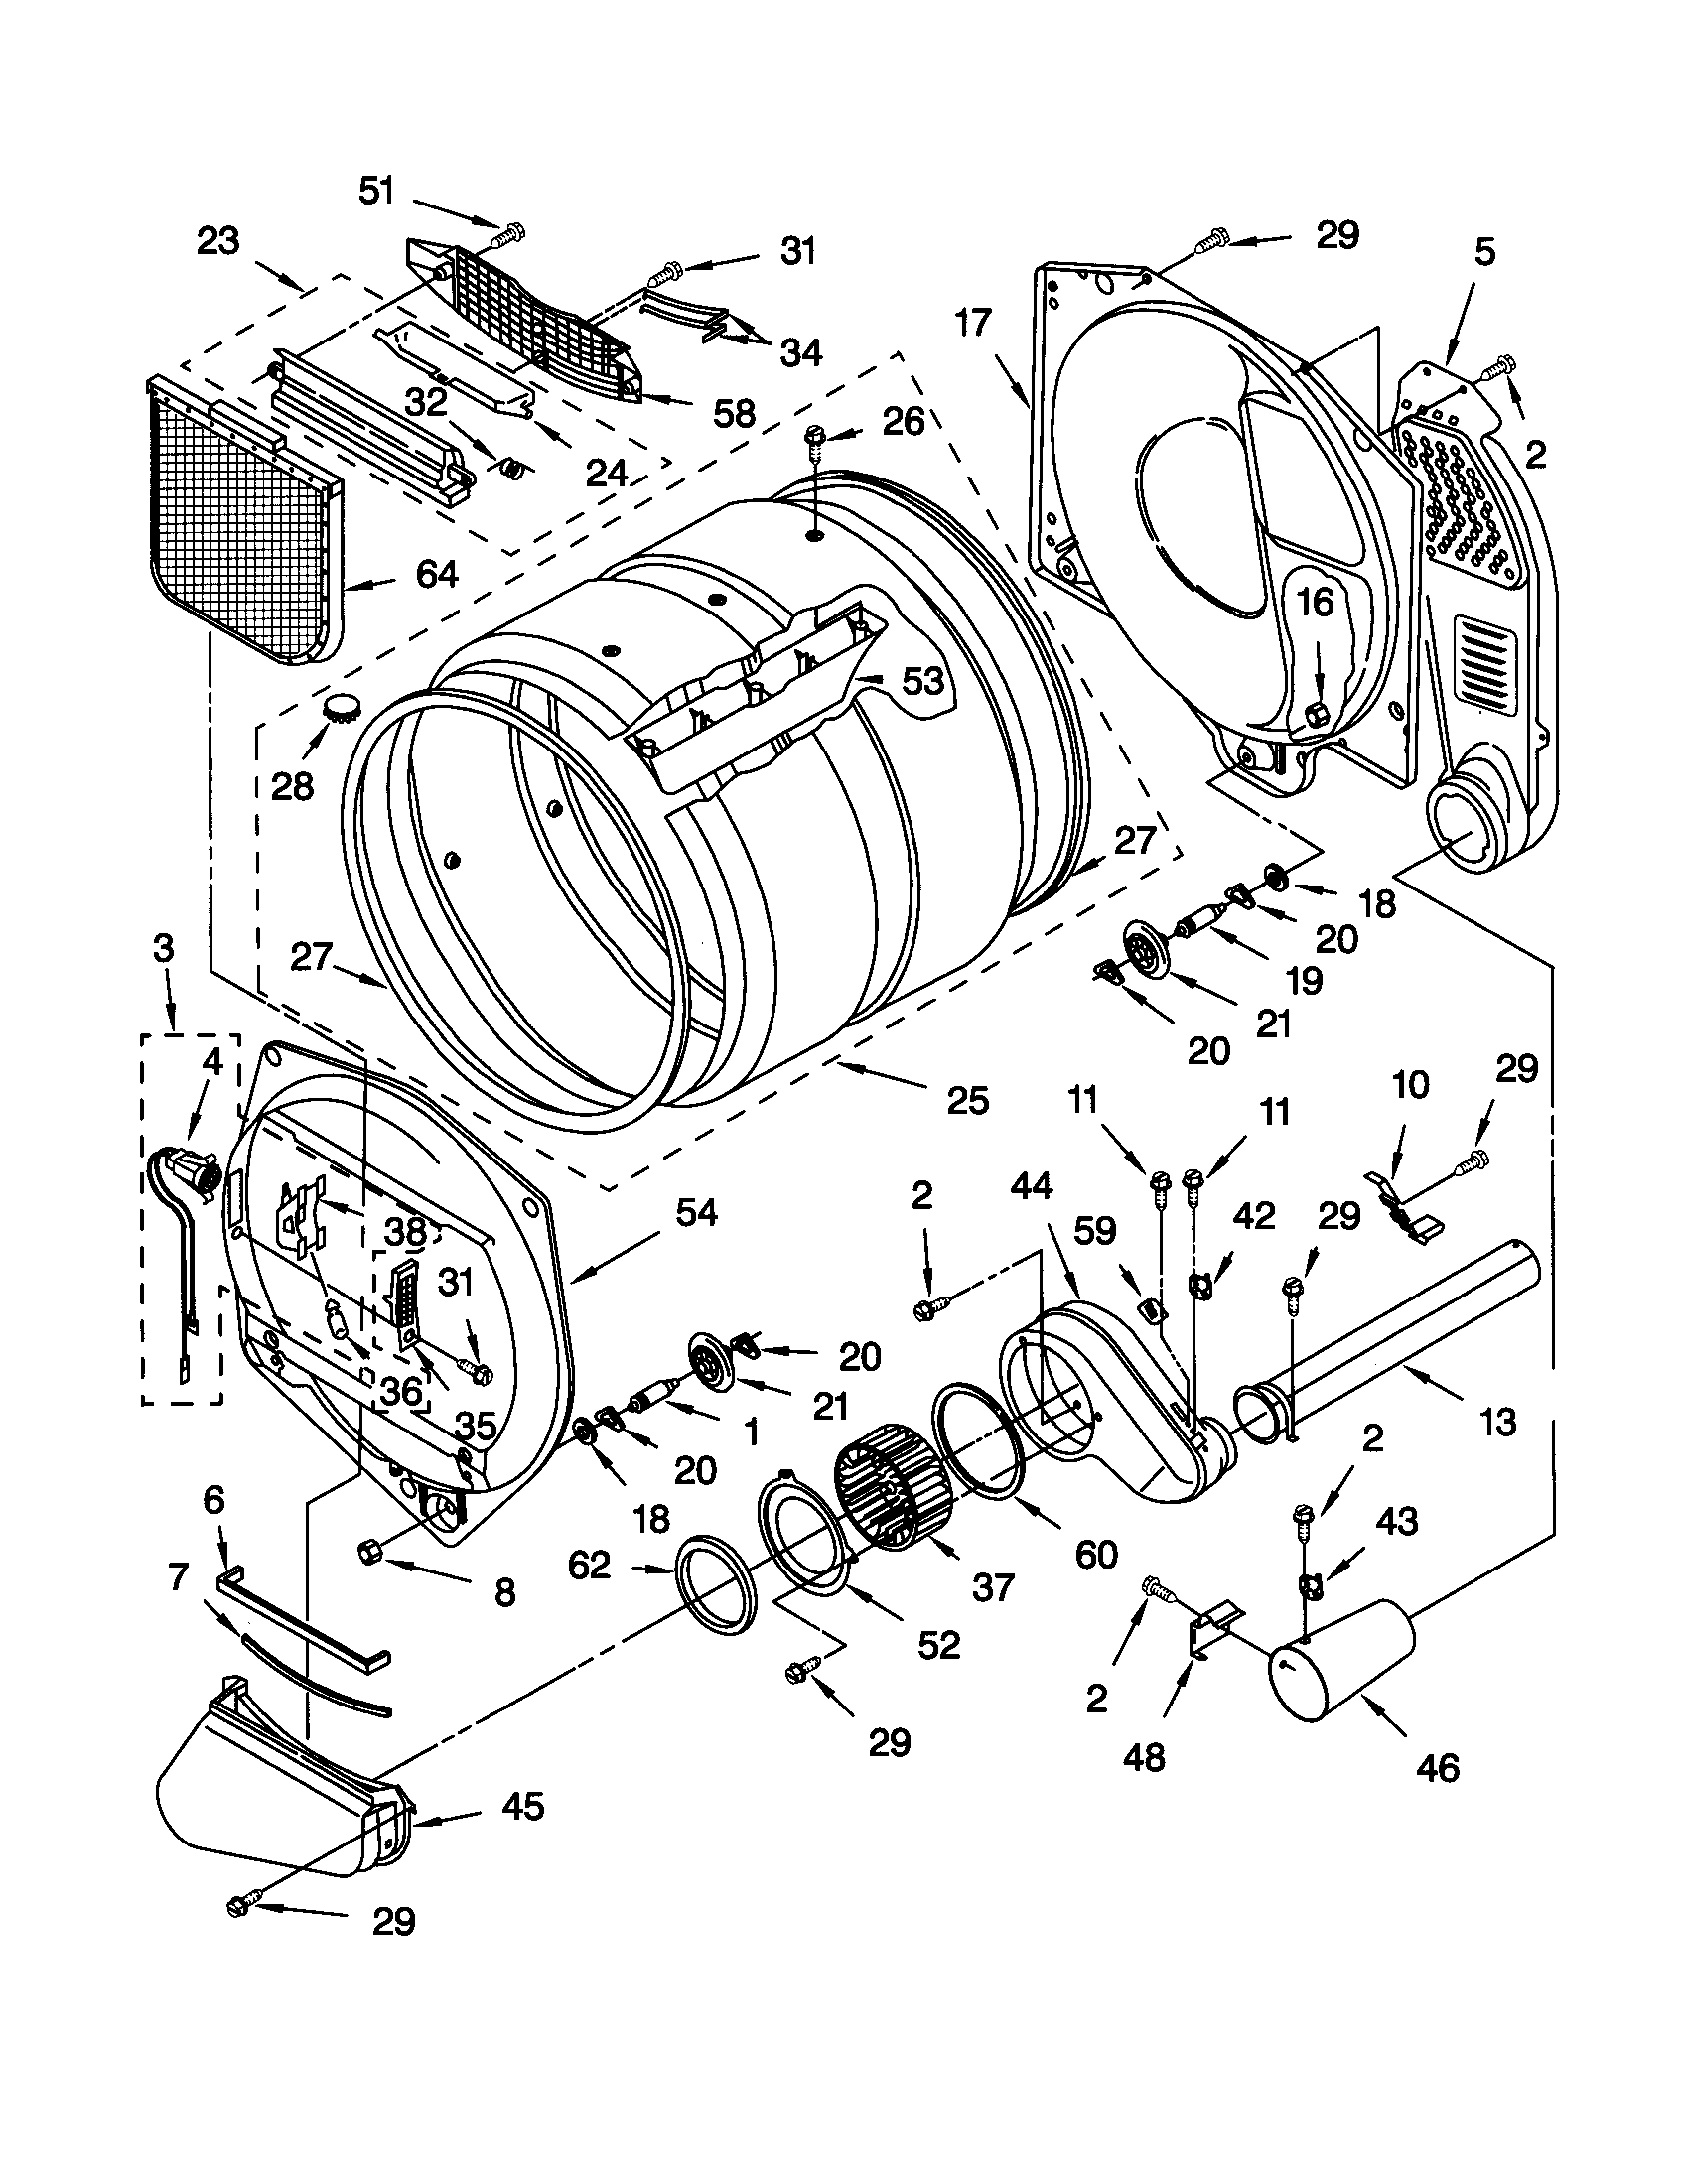 32 Kenmore Elite Front Load Washer Parts Diagram